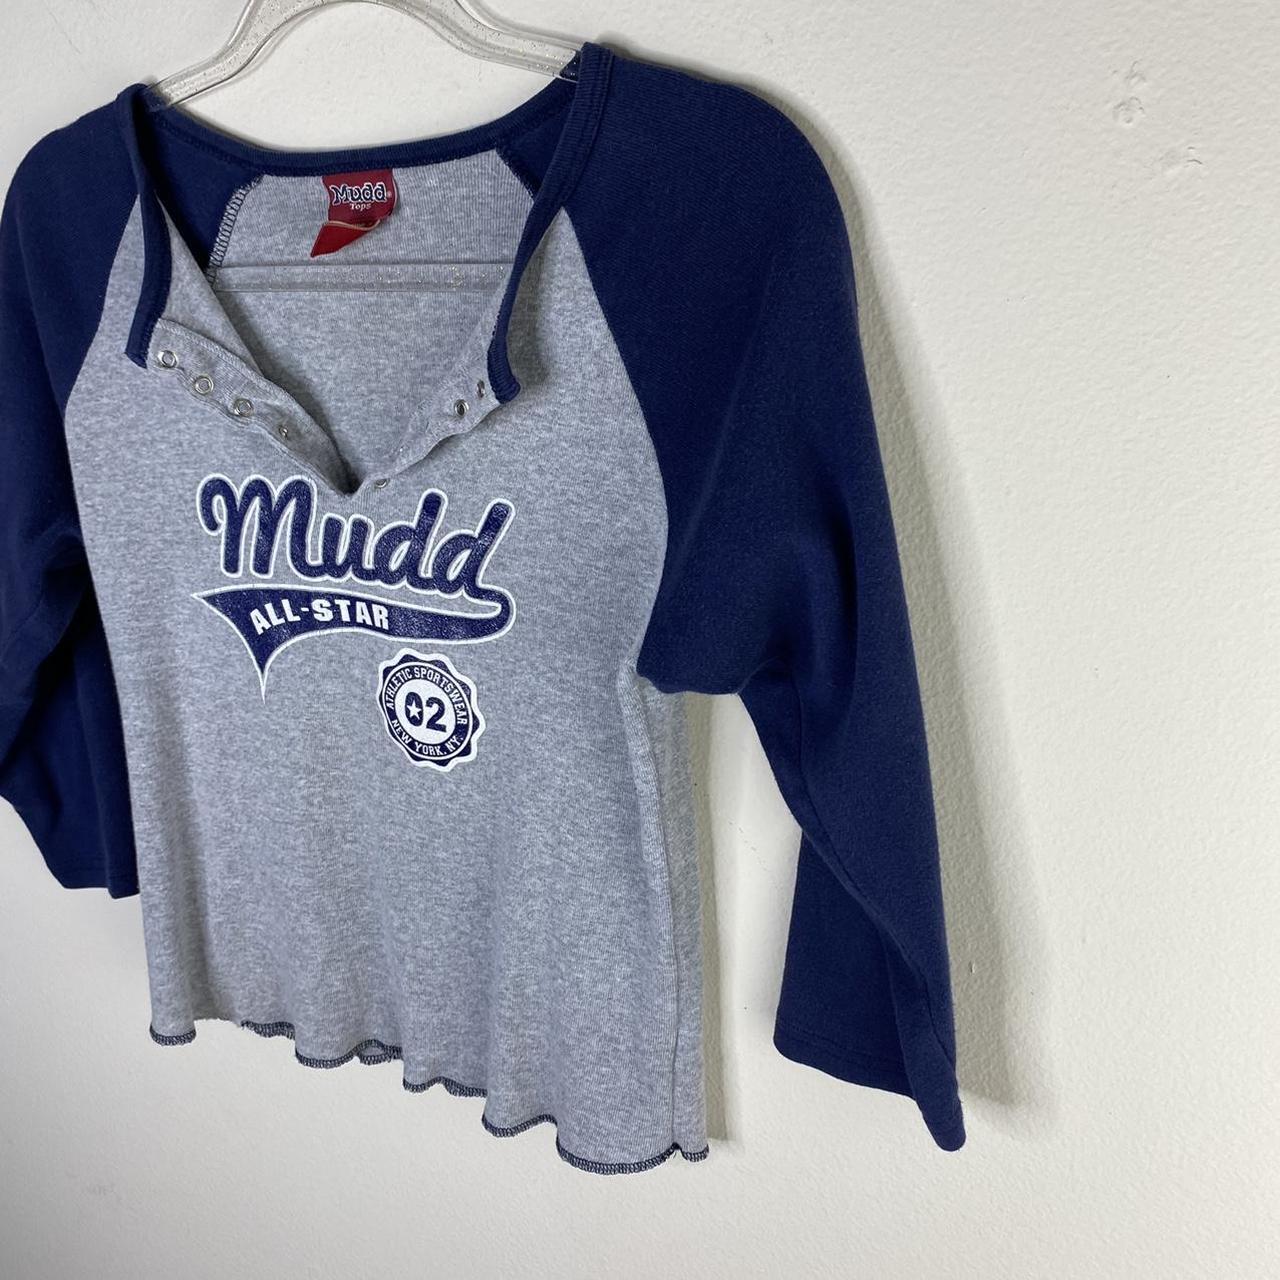 Mudd Clothing Women's Blue and Grey Shirt (2)